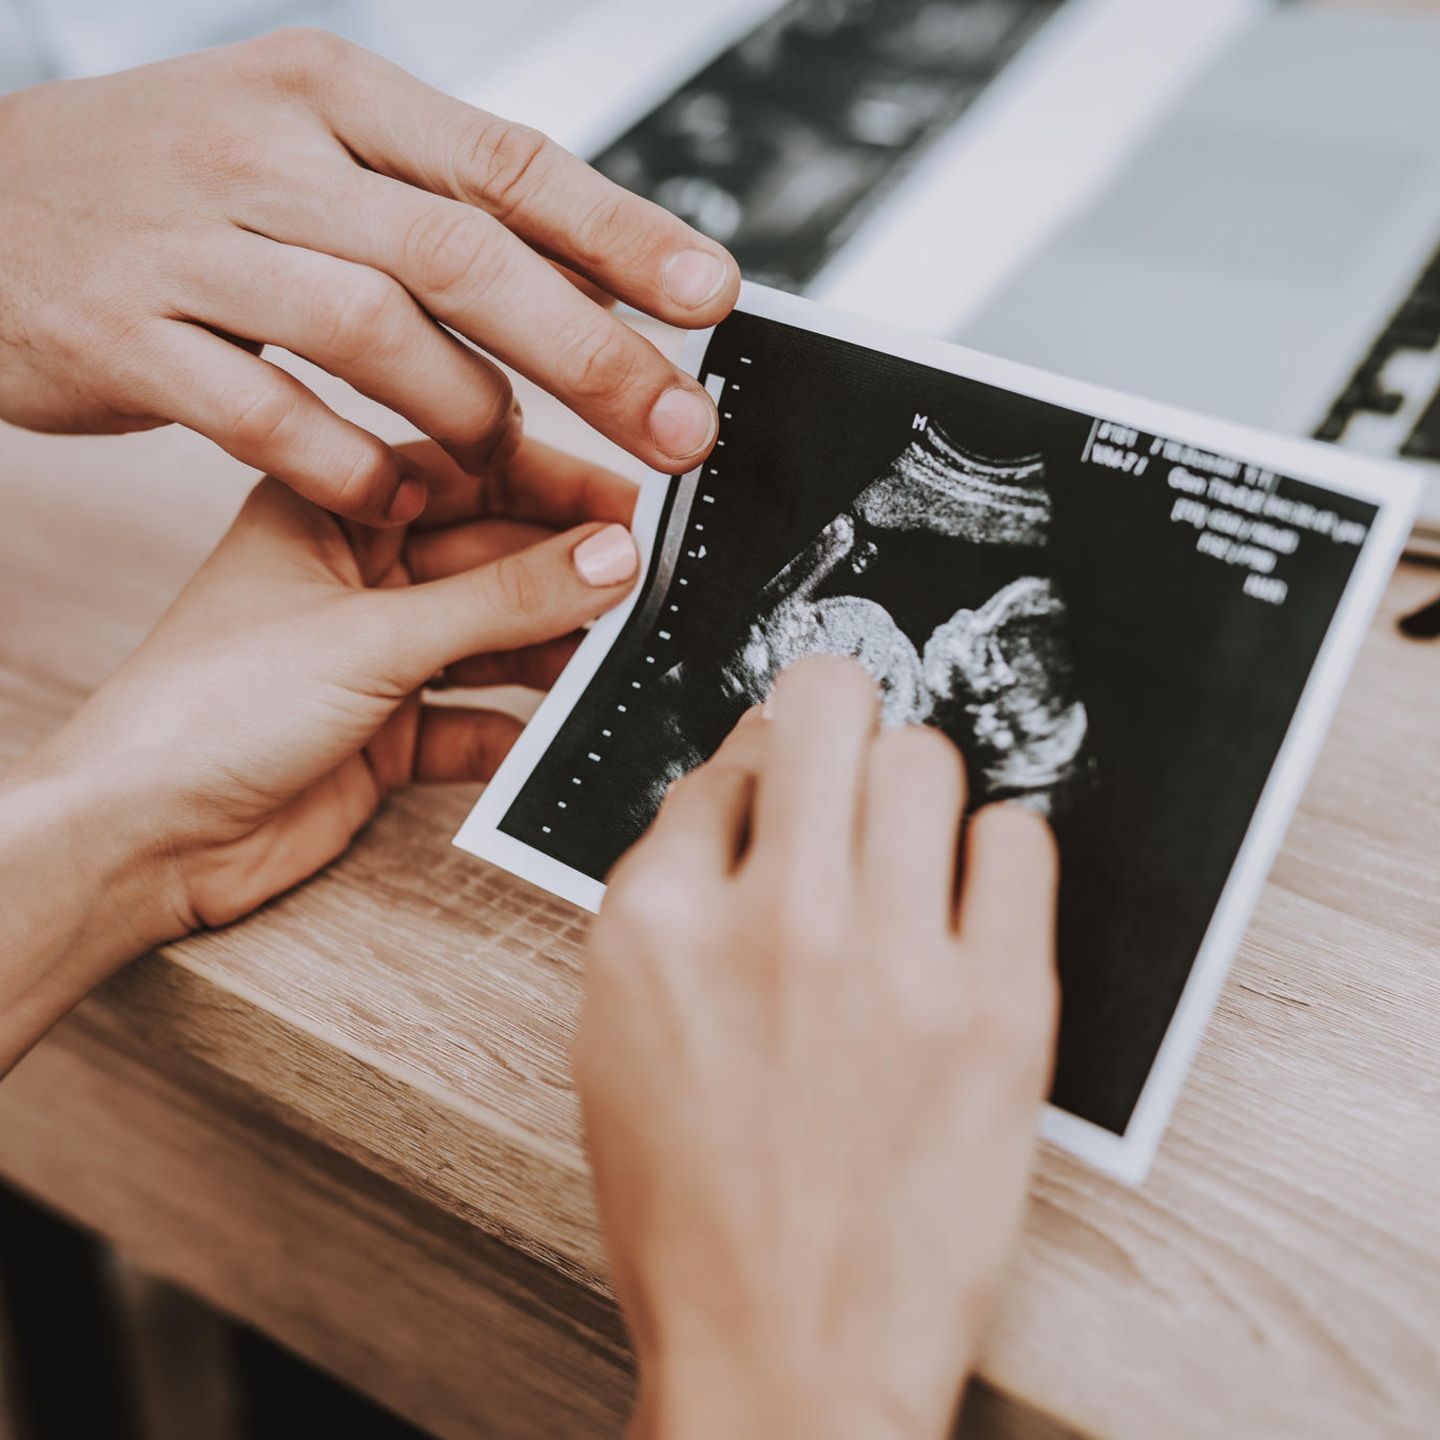 Ausschabung nach lange wie positiv schwangerschaftstest ᐅ HCG